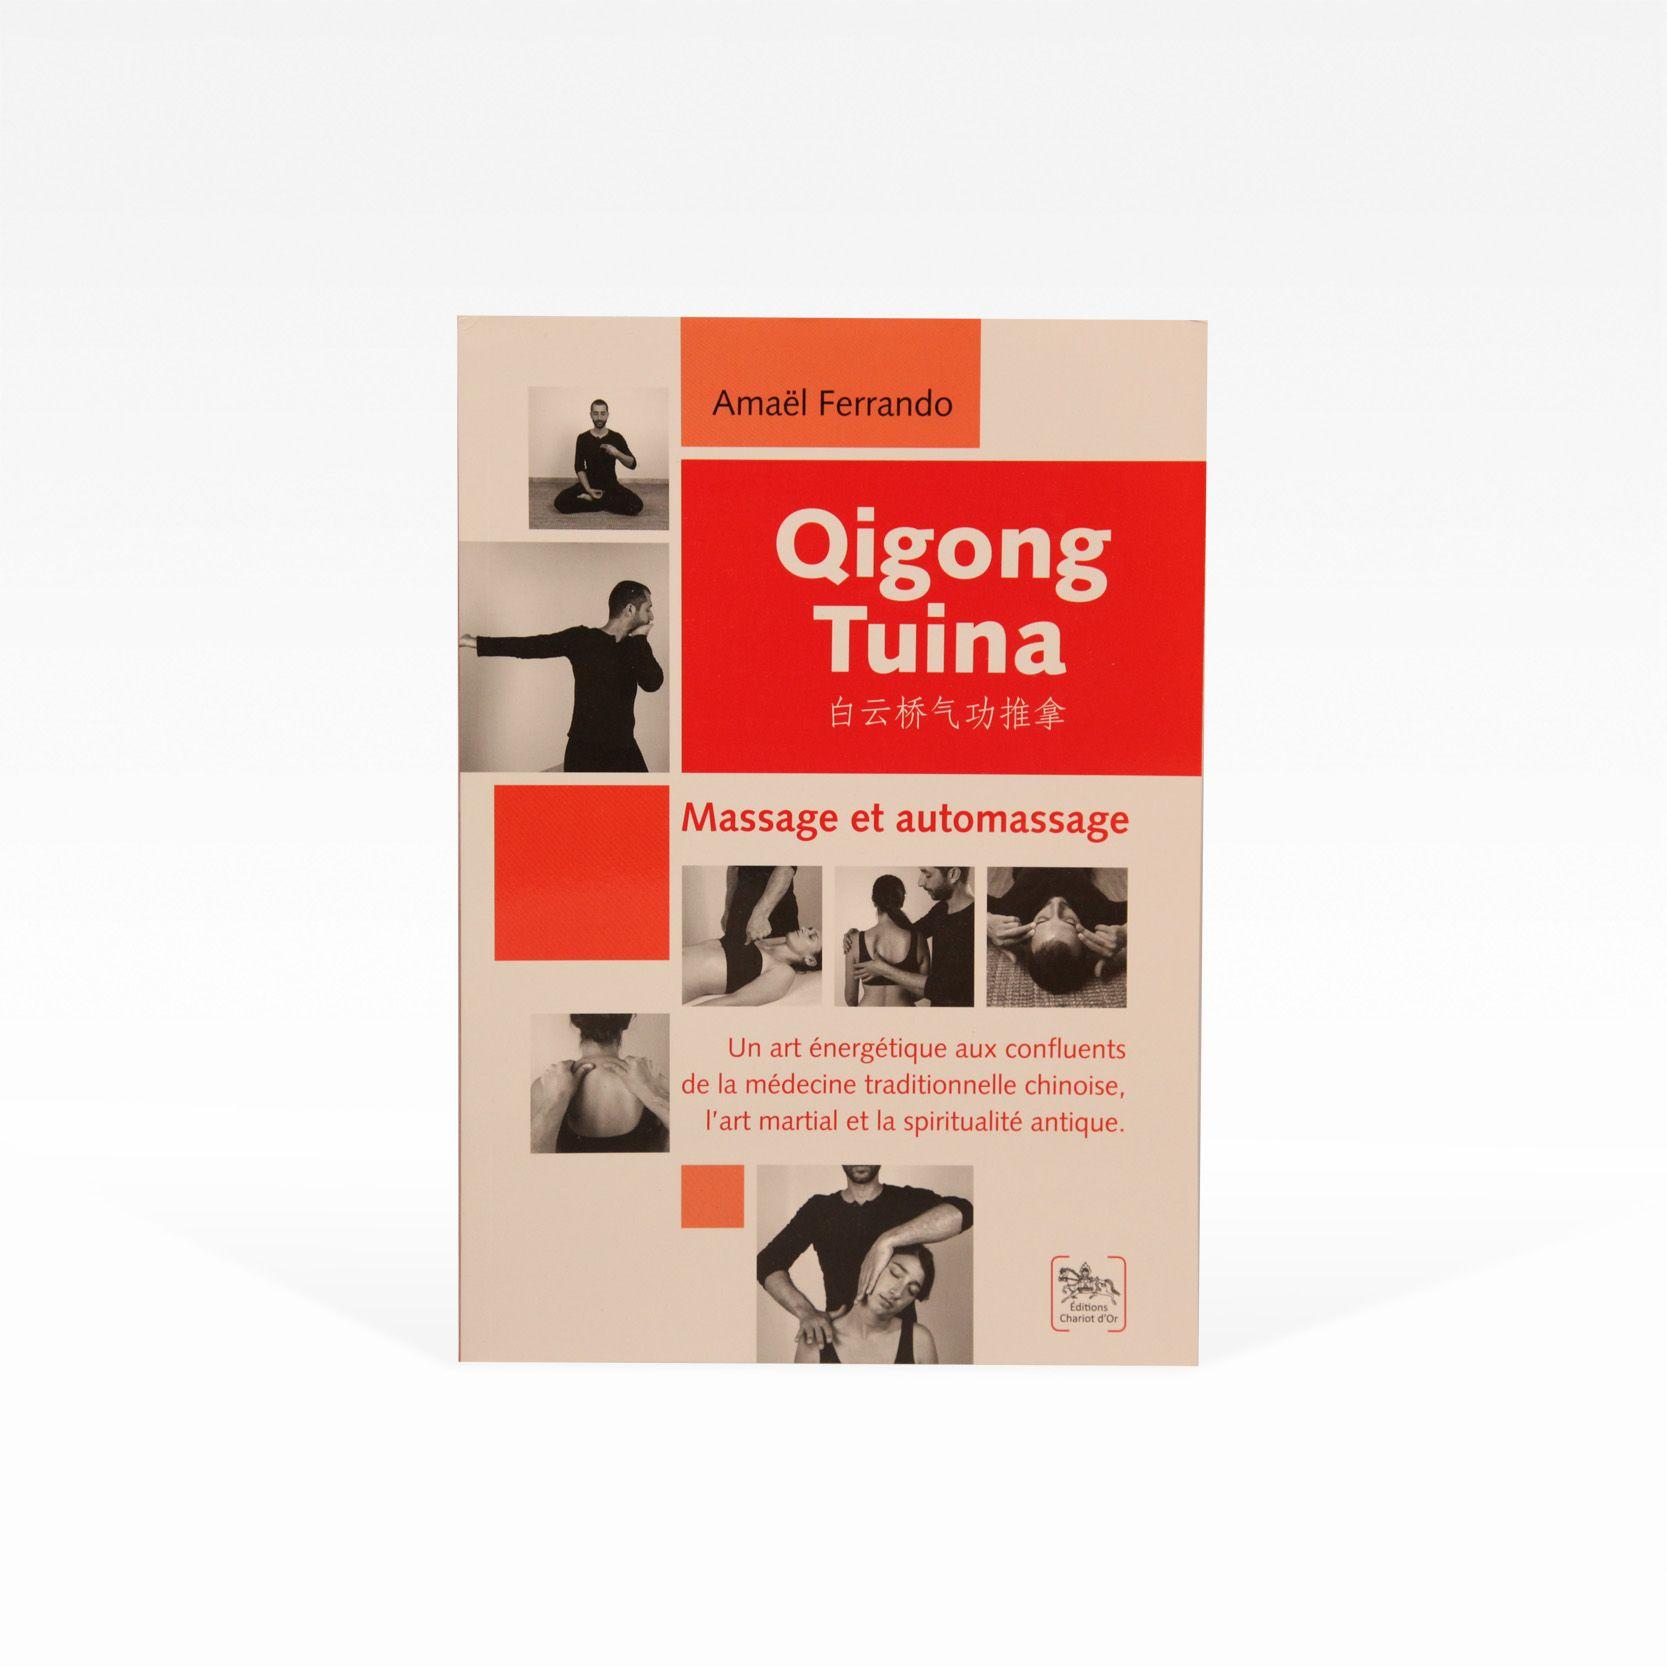 Qigong tuina rouge.jpg